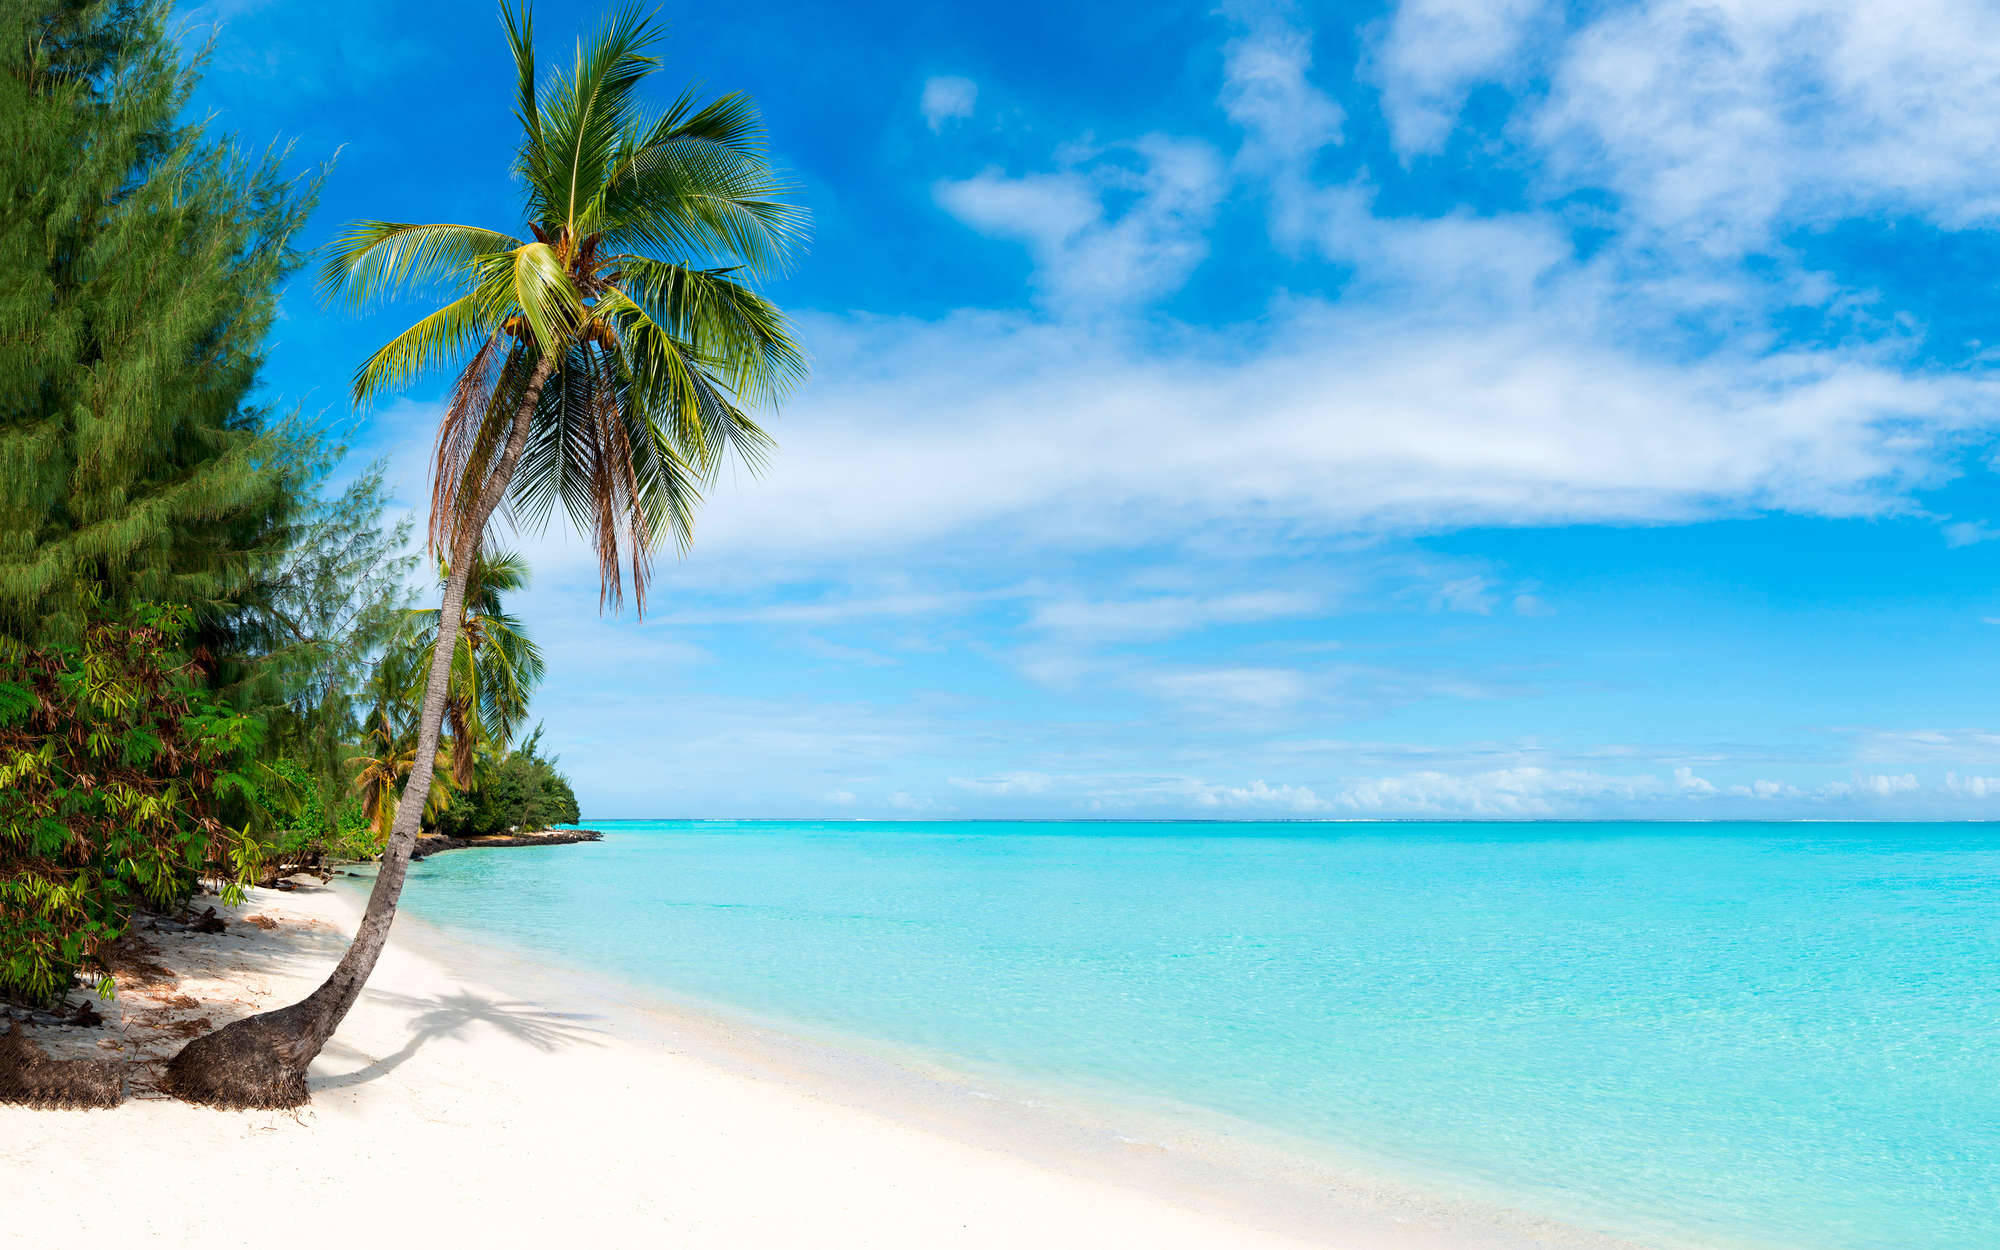             Photo wallpaper sandy beach with palm tree - Premium smooth fleece
        